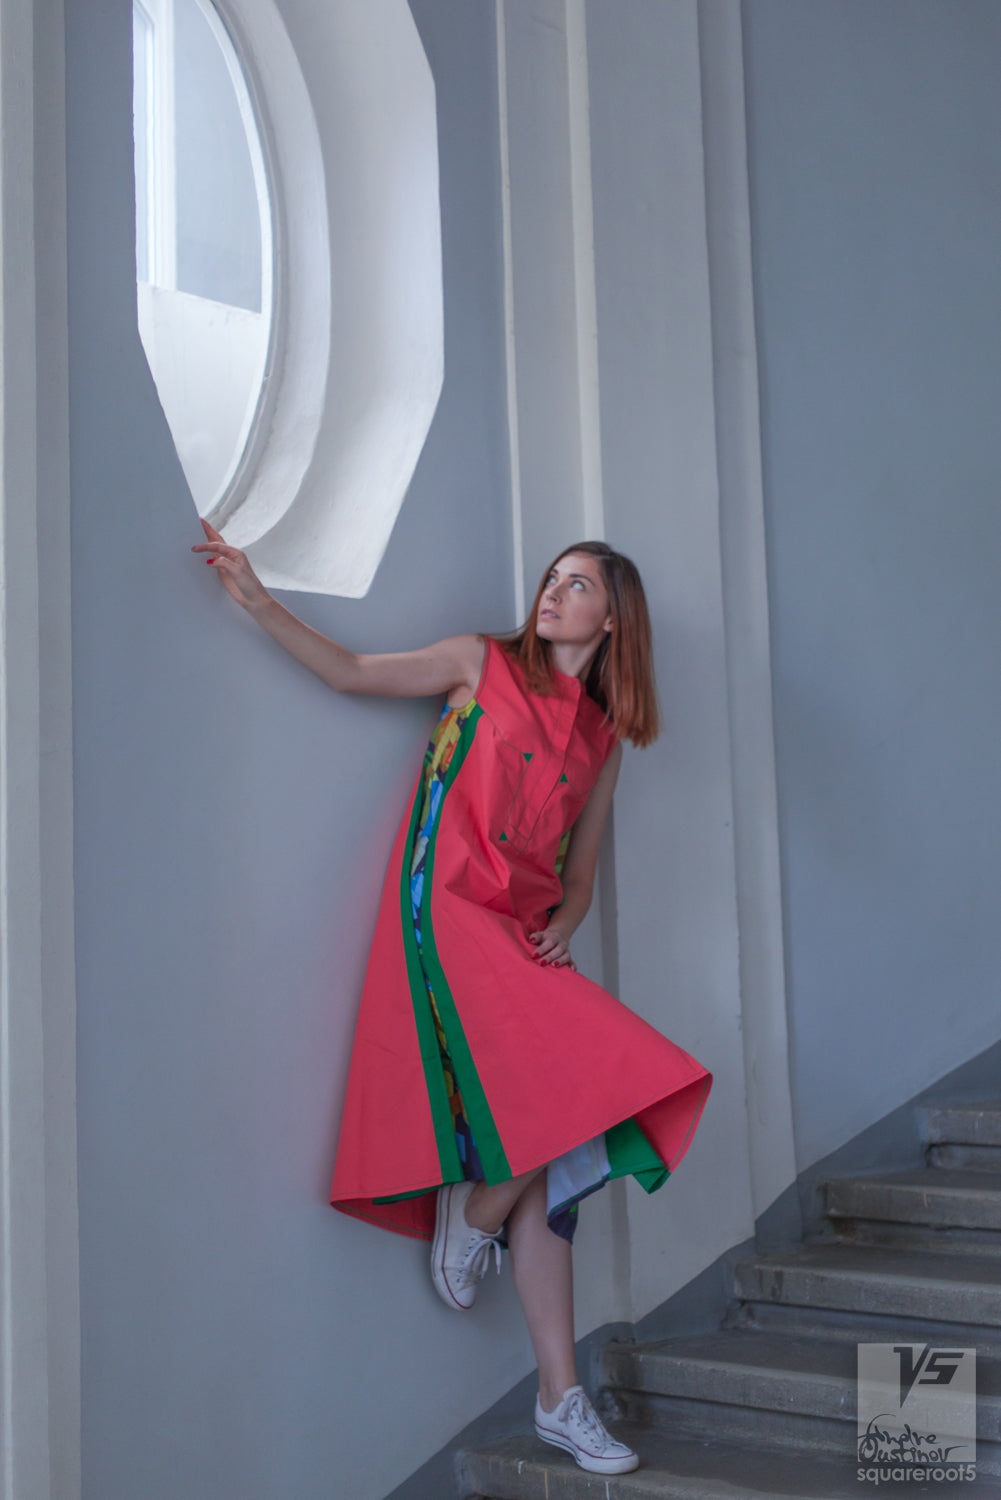 Long avant-garde long geometric dress "Cosmic tetris" model "Orange Green" Designer dresses for creative women by Squareroot5 wear . Architectural Institute shot. Interior